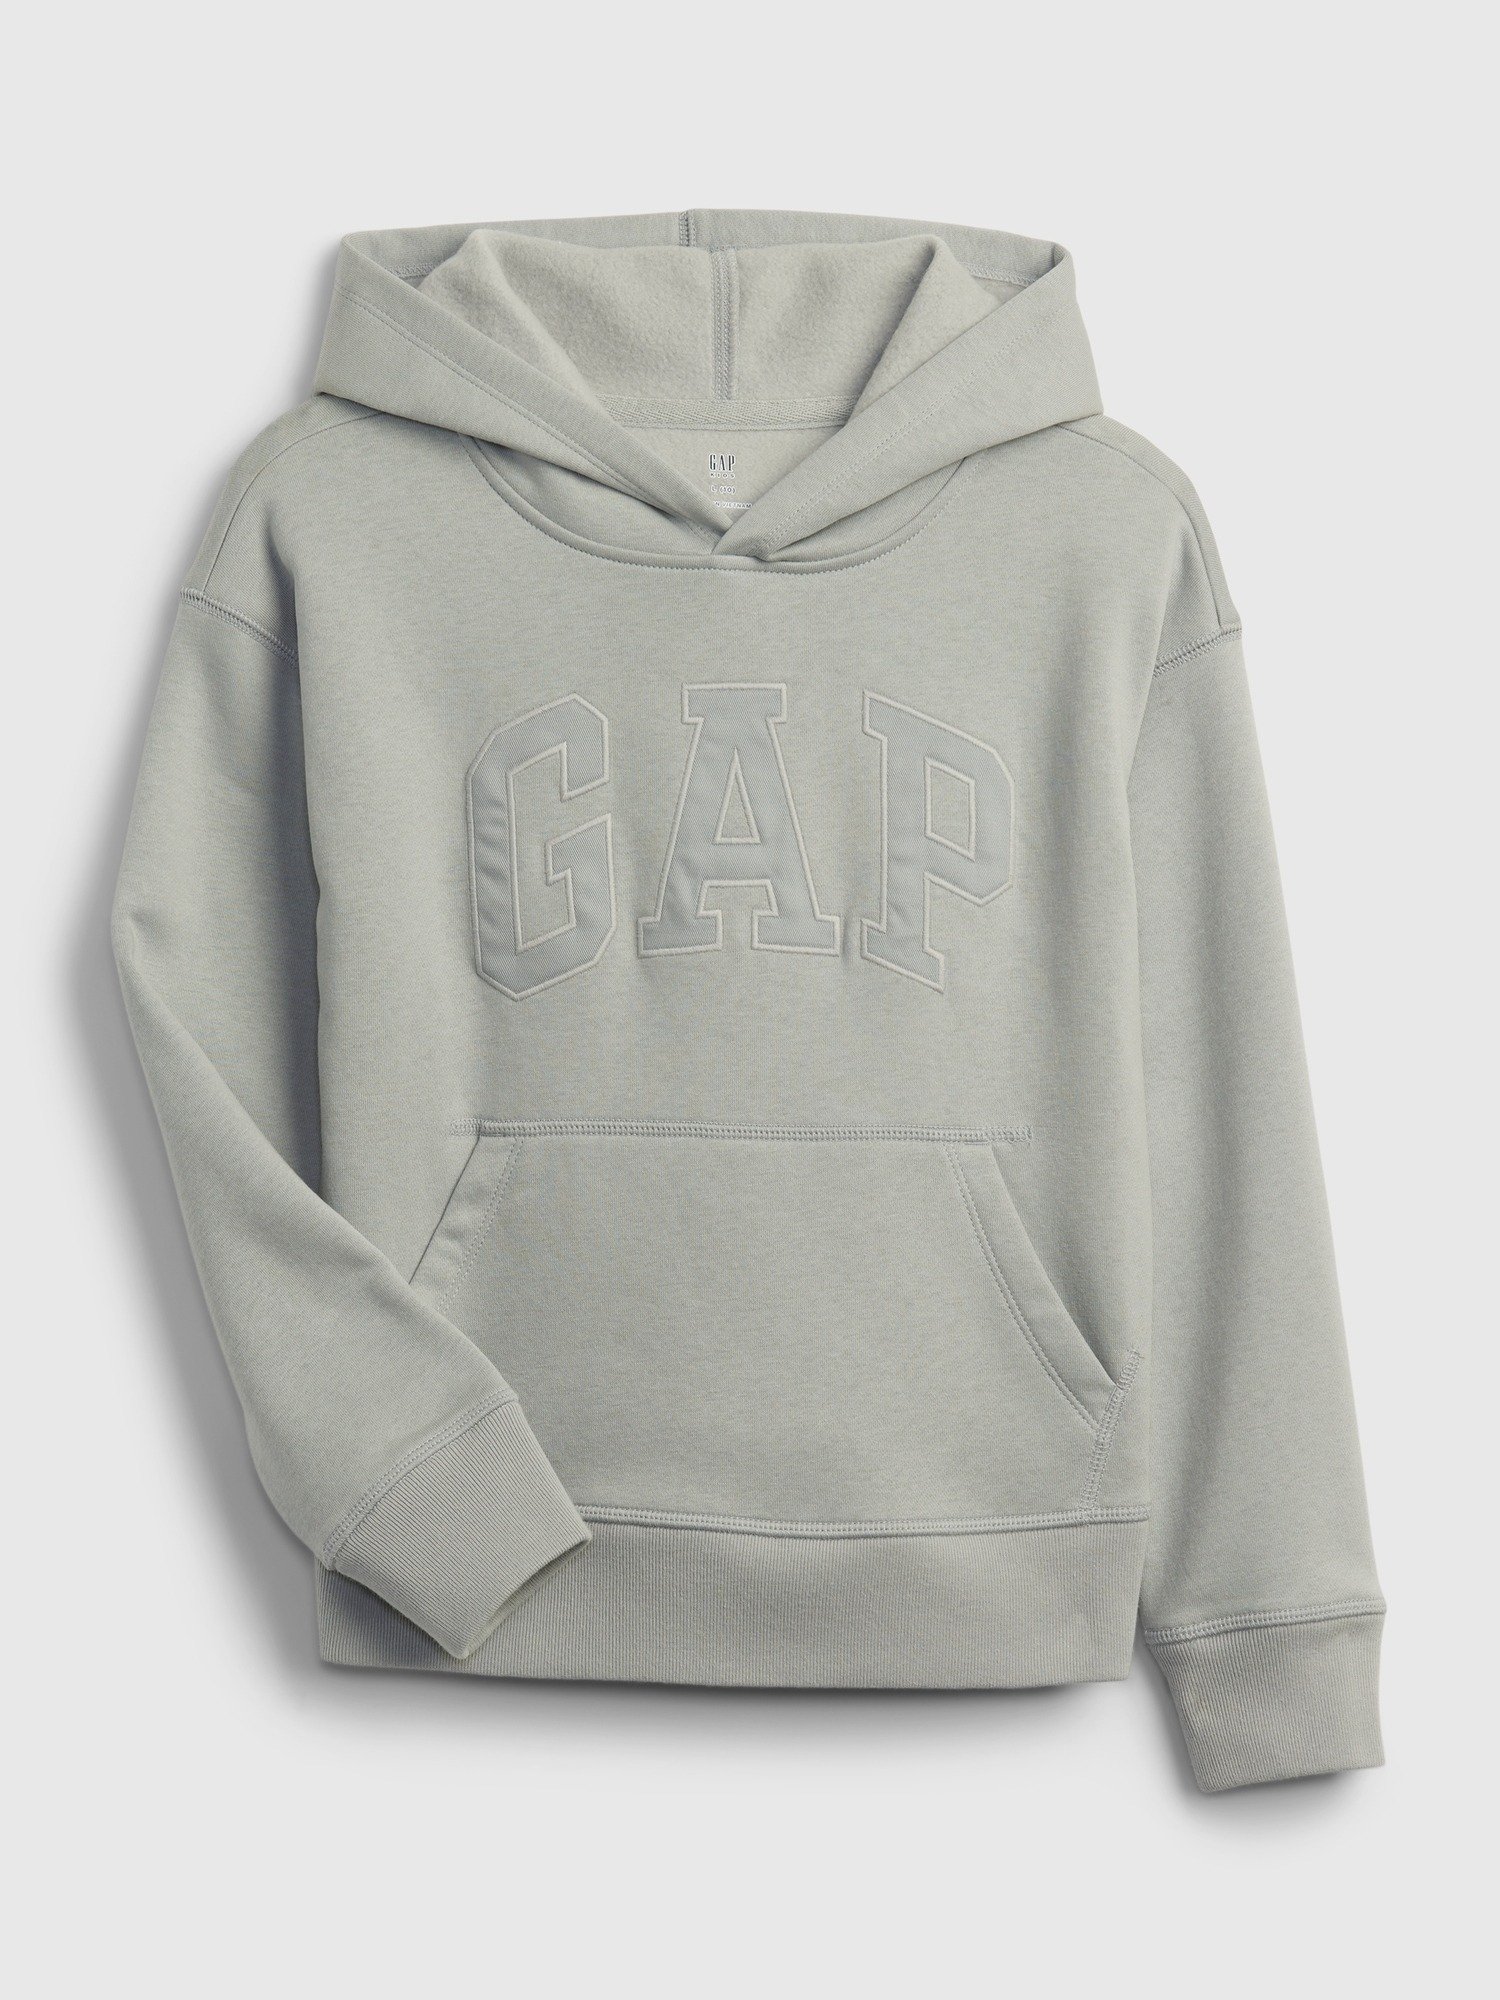 Gap Arch Logo Sweatshirt product image